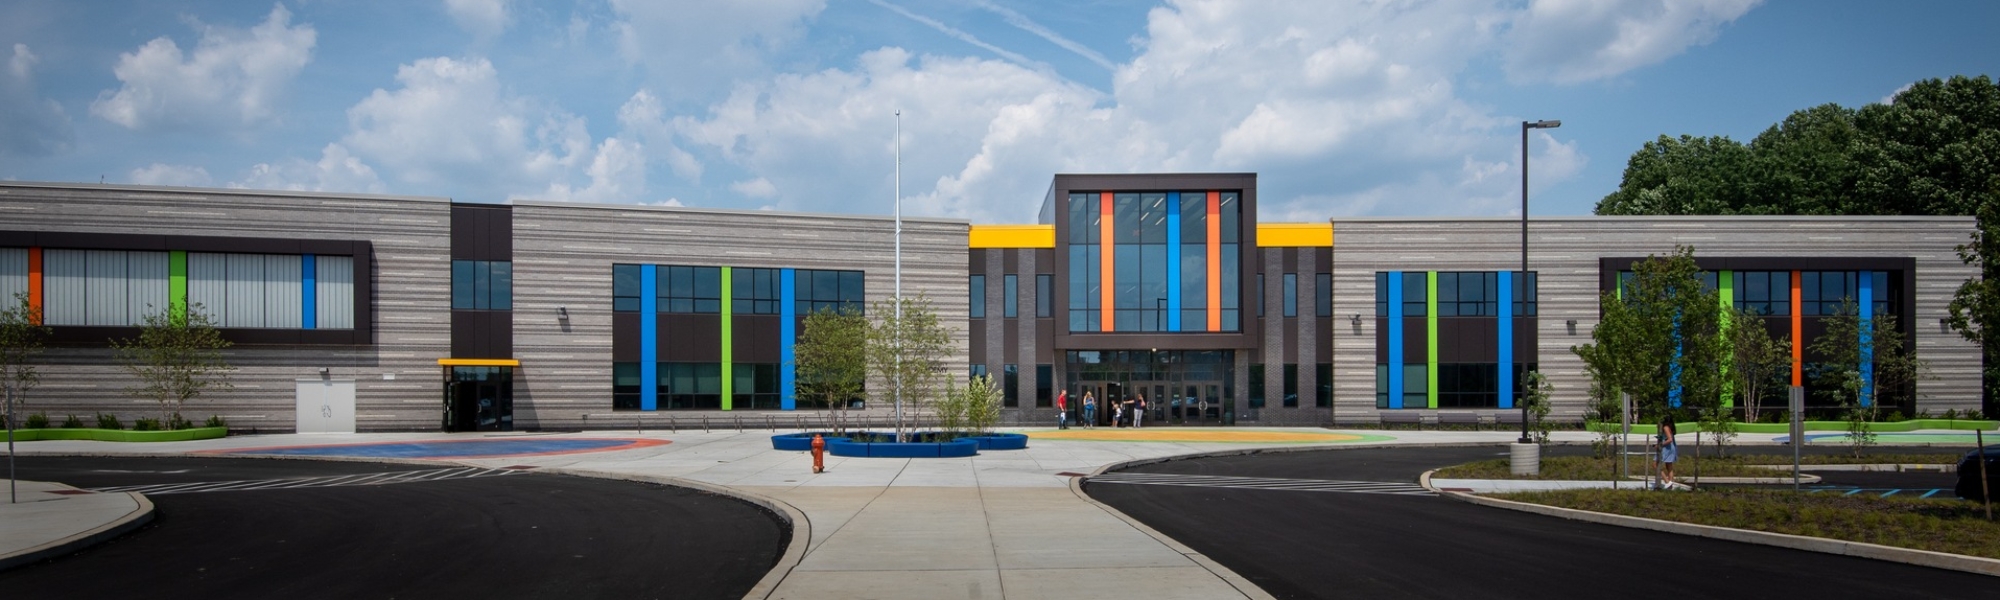 Philadelphia School District Northeast Community Propel Academy 3